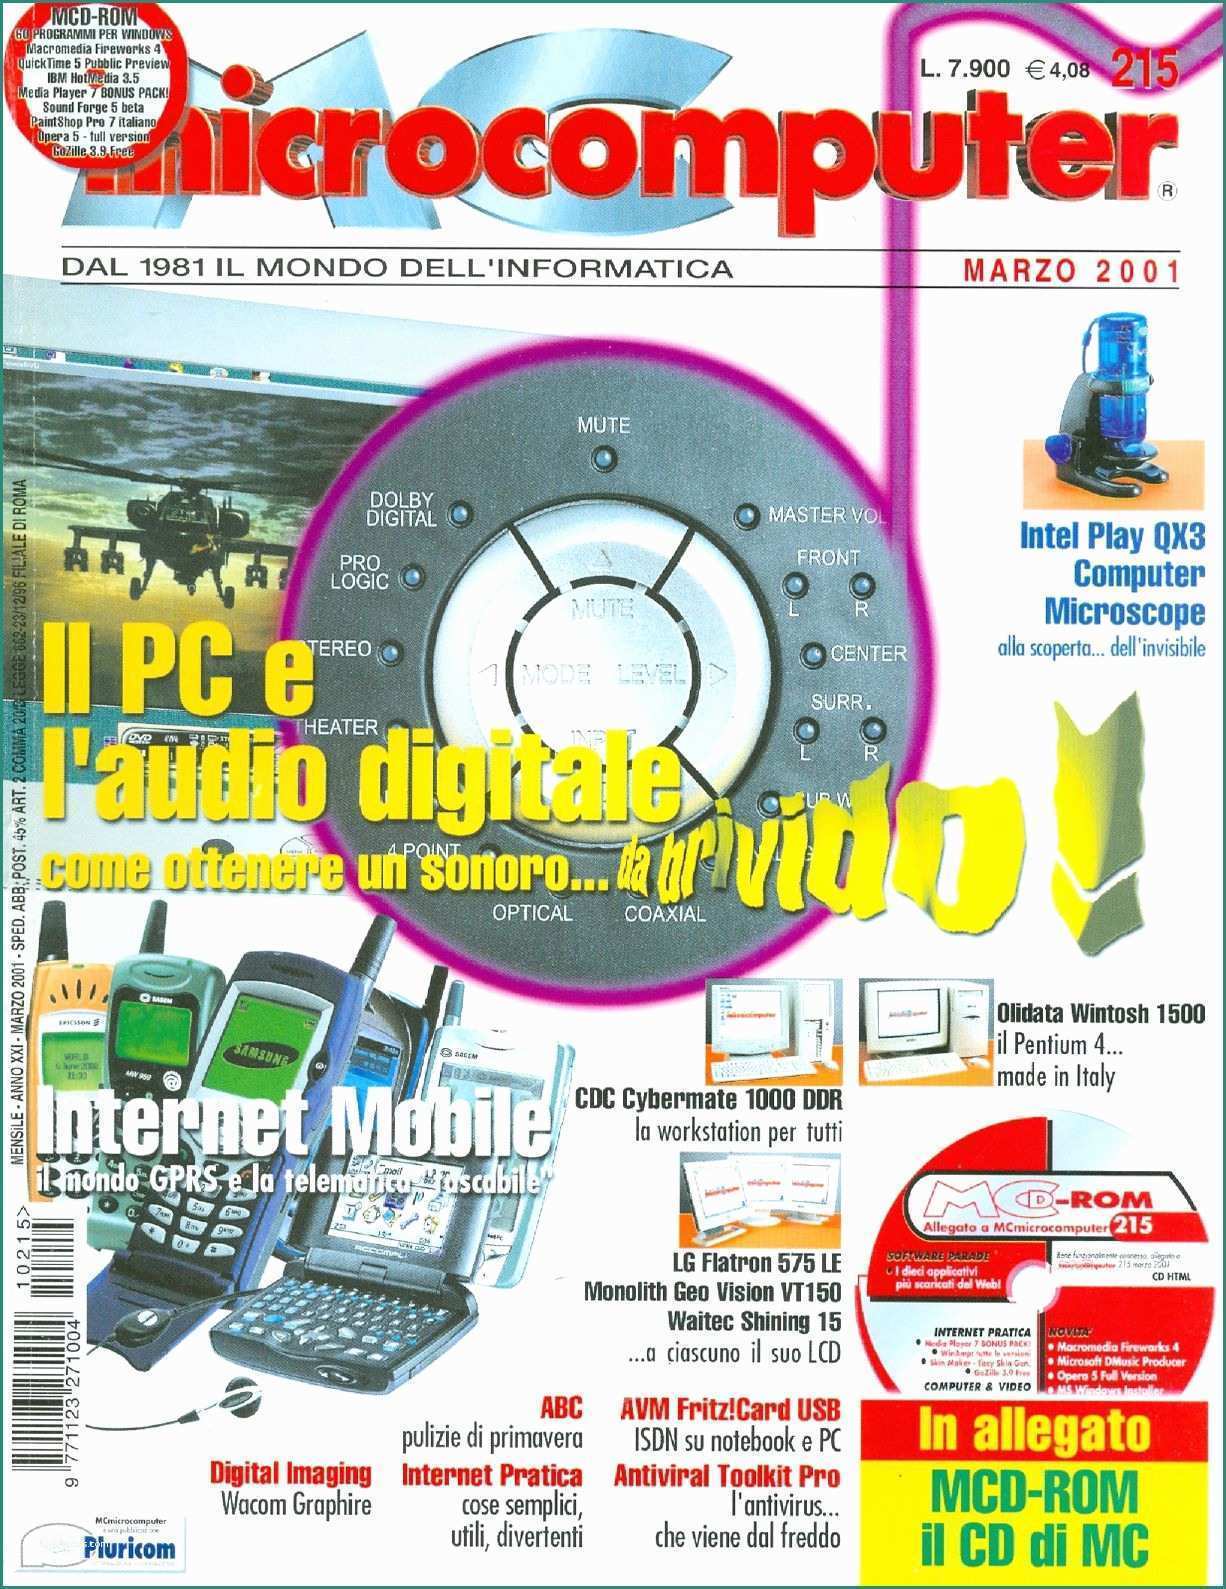 Misure Divano Posti Standard E 215 Mcmicro Puter by Adpware issuu